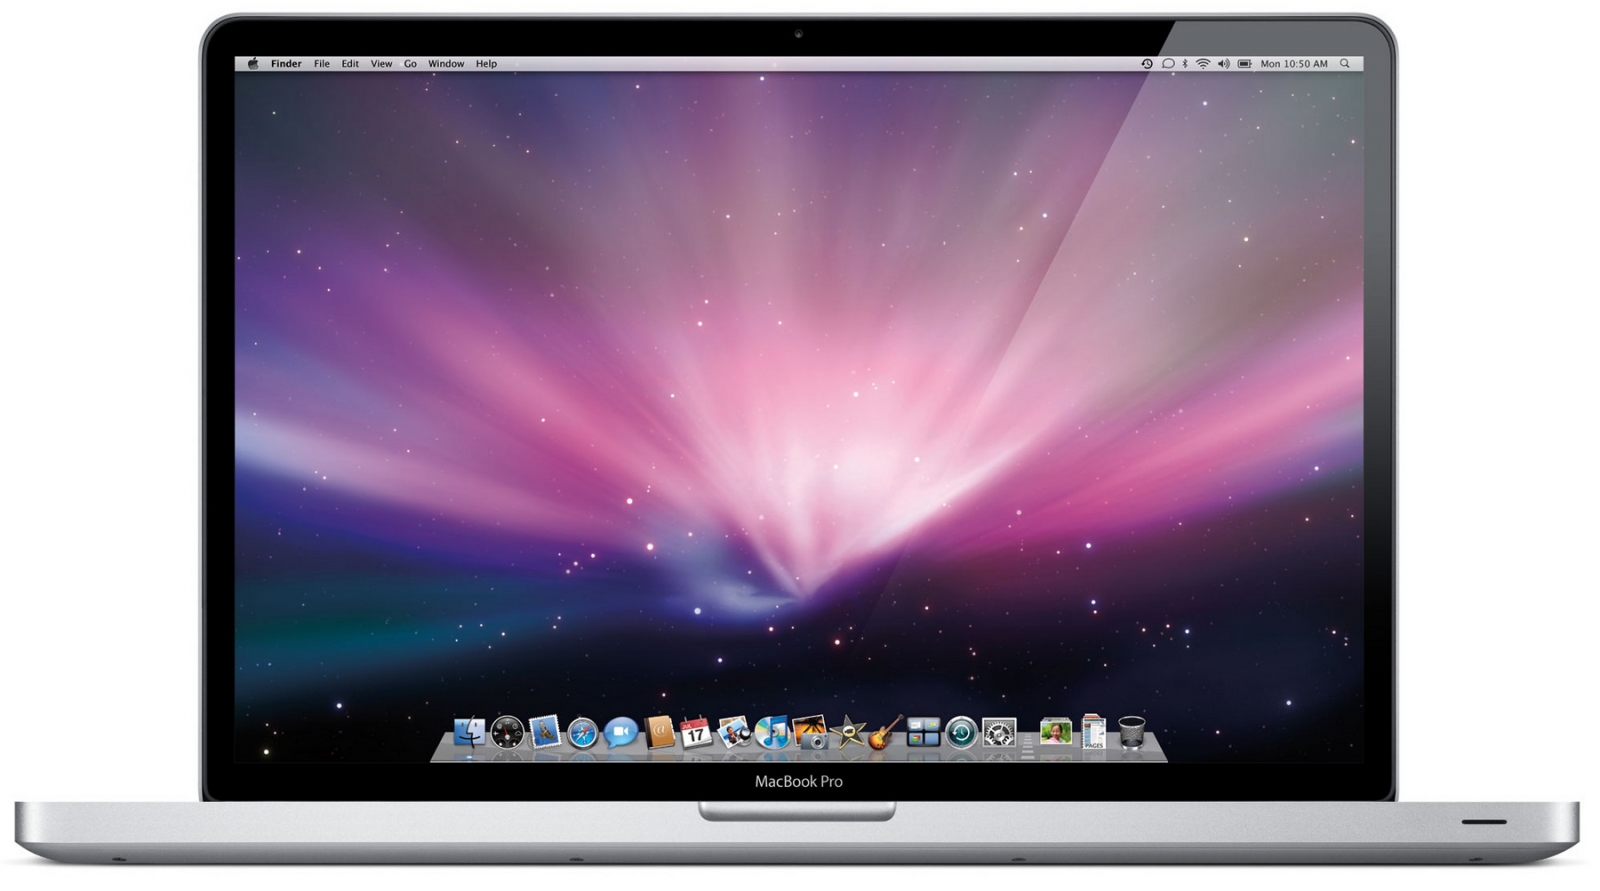 apple macbook pro 15 mid 2009 136aa